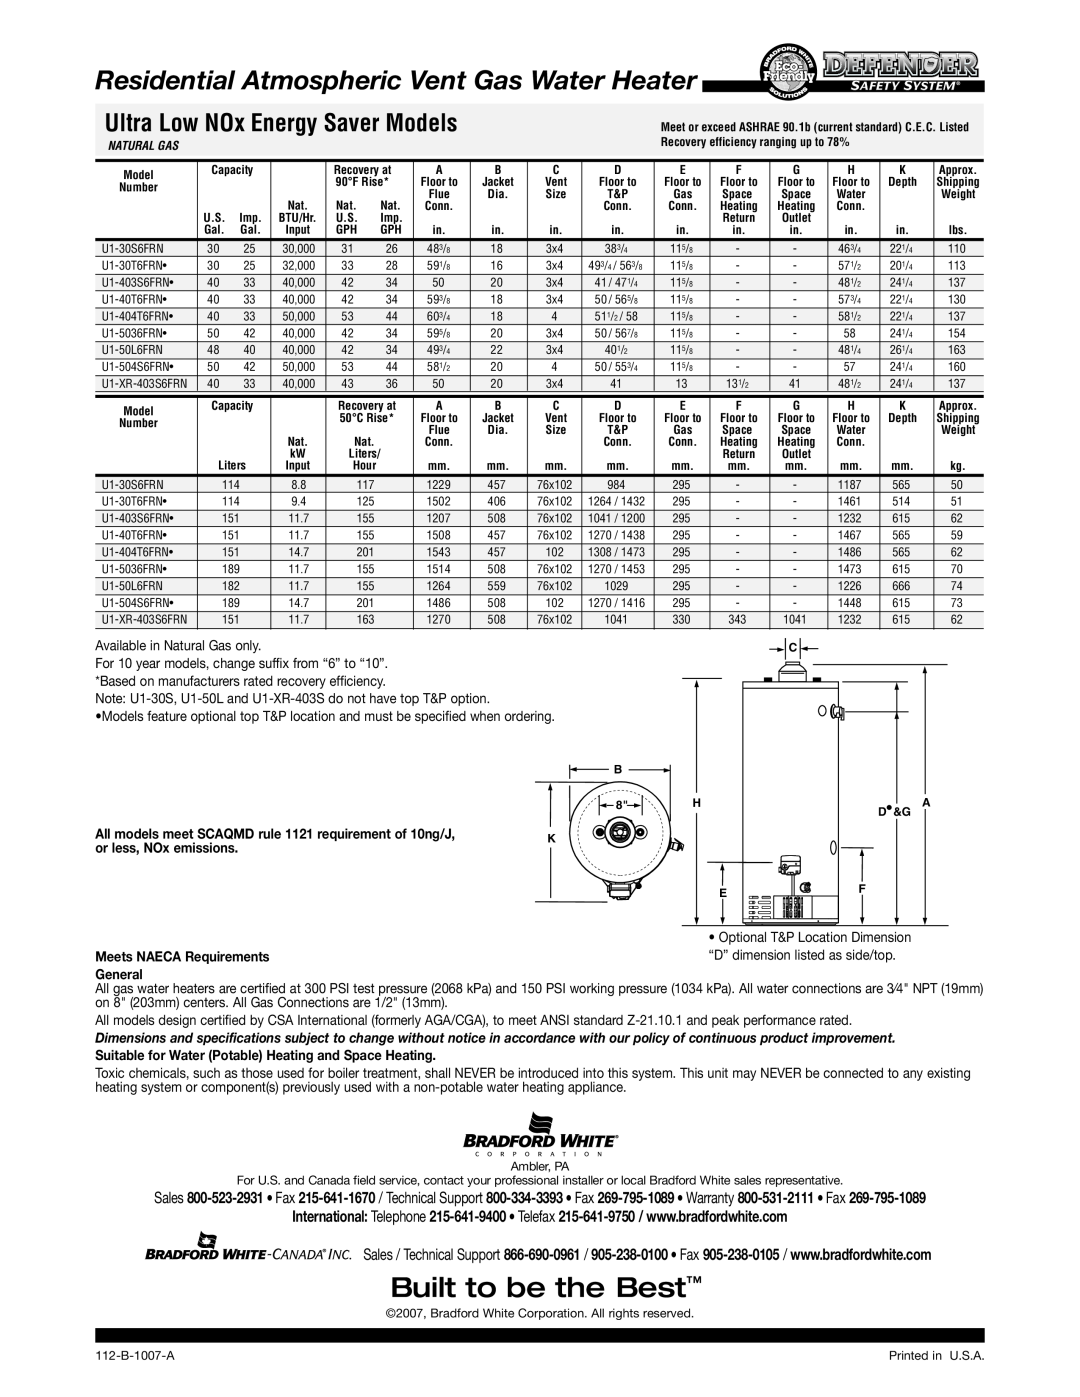 Bradford-White Corp U1-5036FRN Residential Atmospheric Vent Gas Water Heater, Ultra Low NOx Energy Saver Models, General 